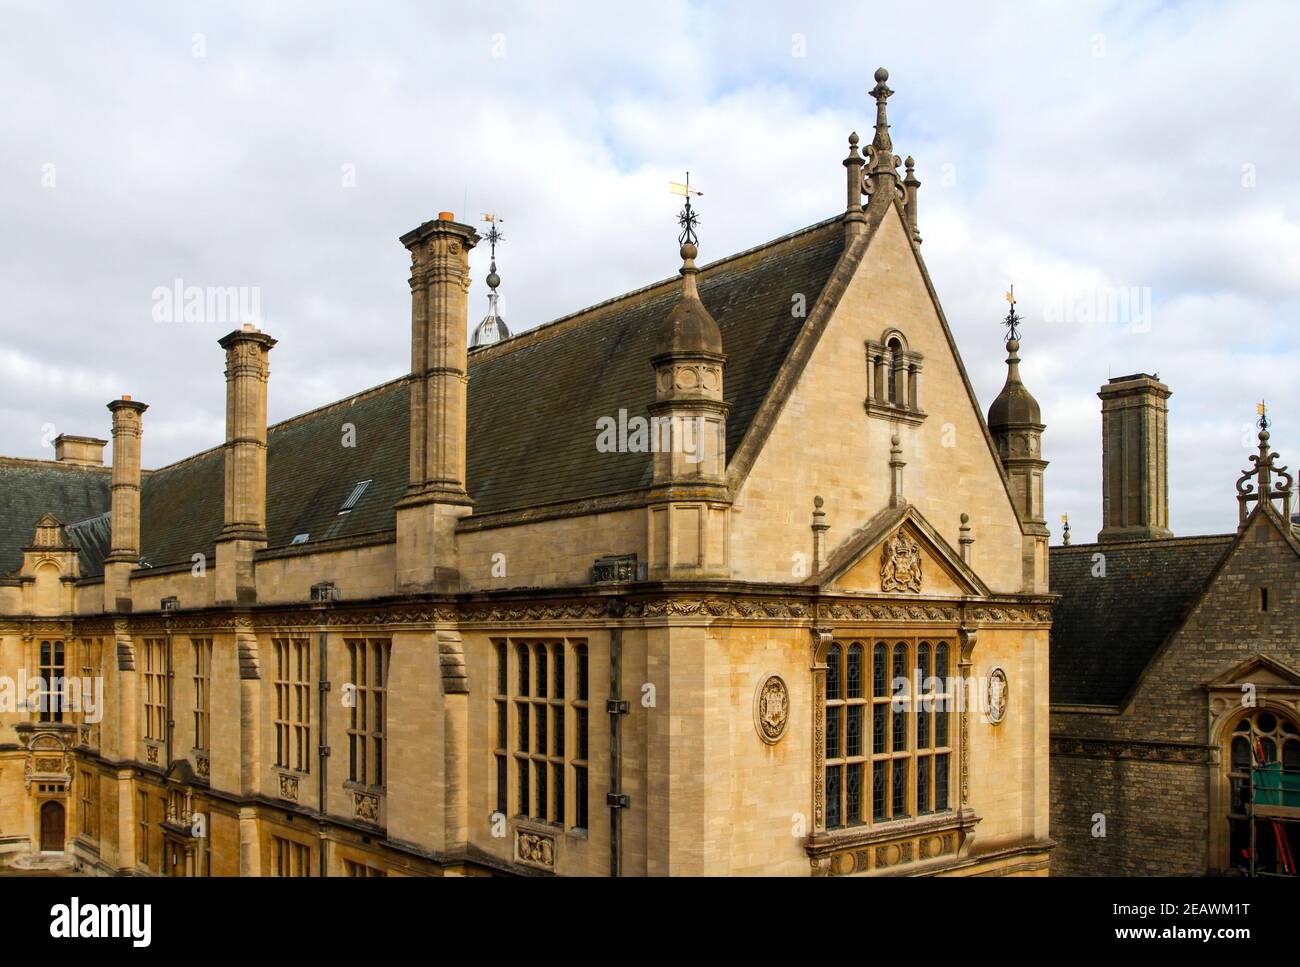 Rooftop of The Oxford University Examinations School, Merton Street. Ornate Clipsham stonework, leaded windows, chimneys and weather vanes Stock Photo